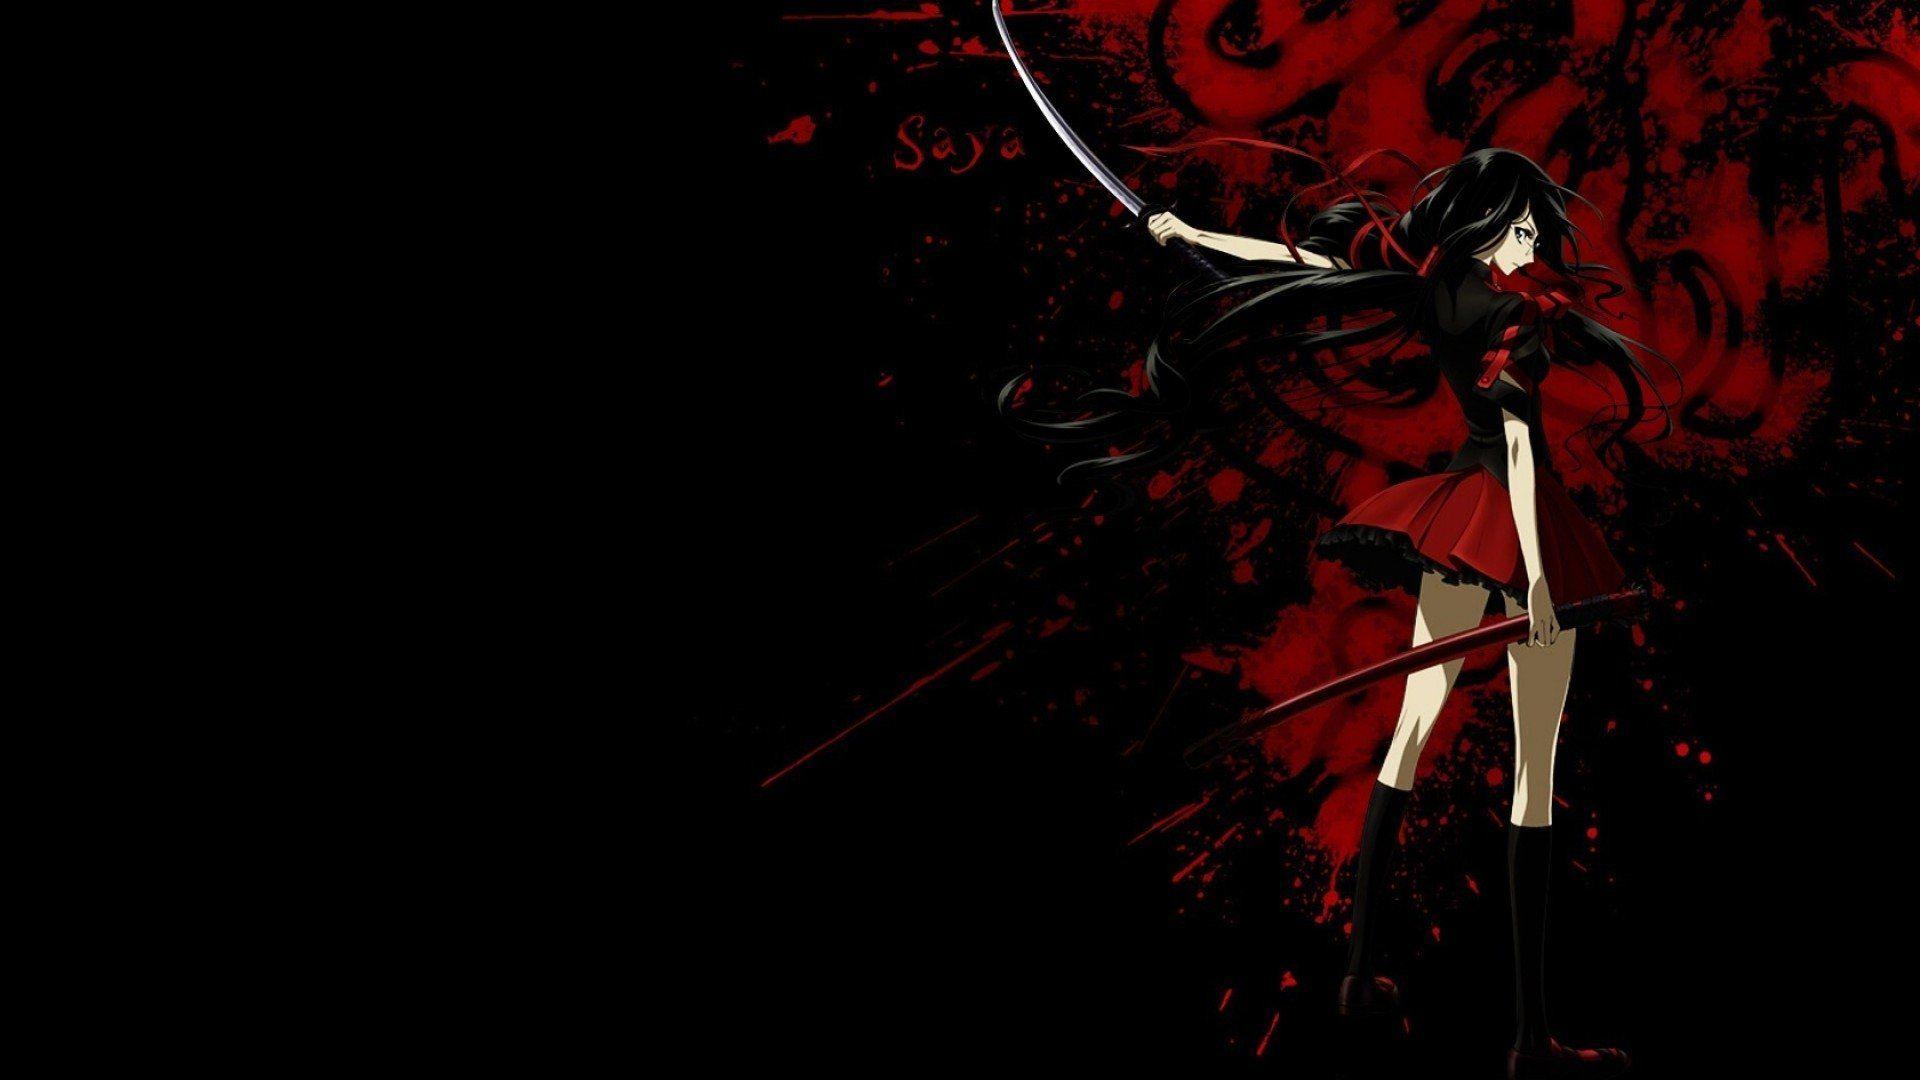 Girl weapon revolver tie blood anime wallpaper  1680x1050  514424   WallpaperUP